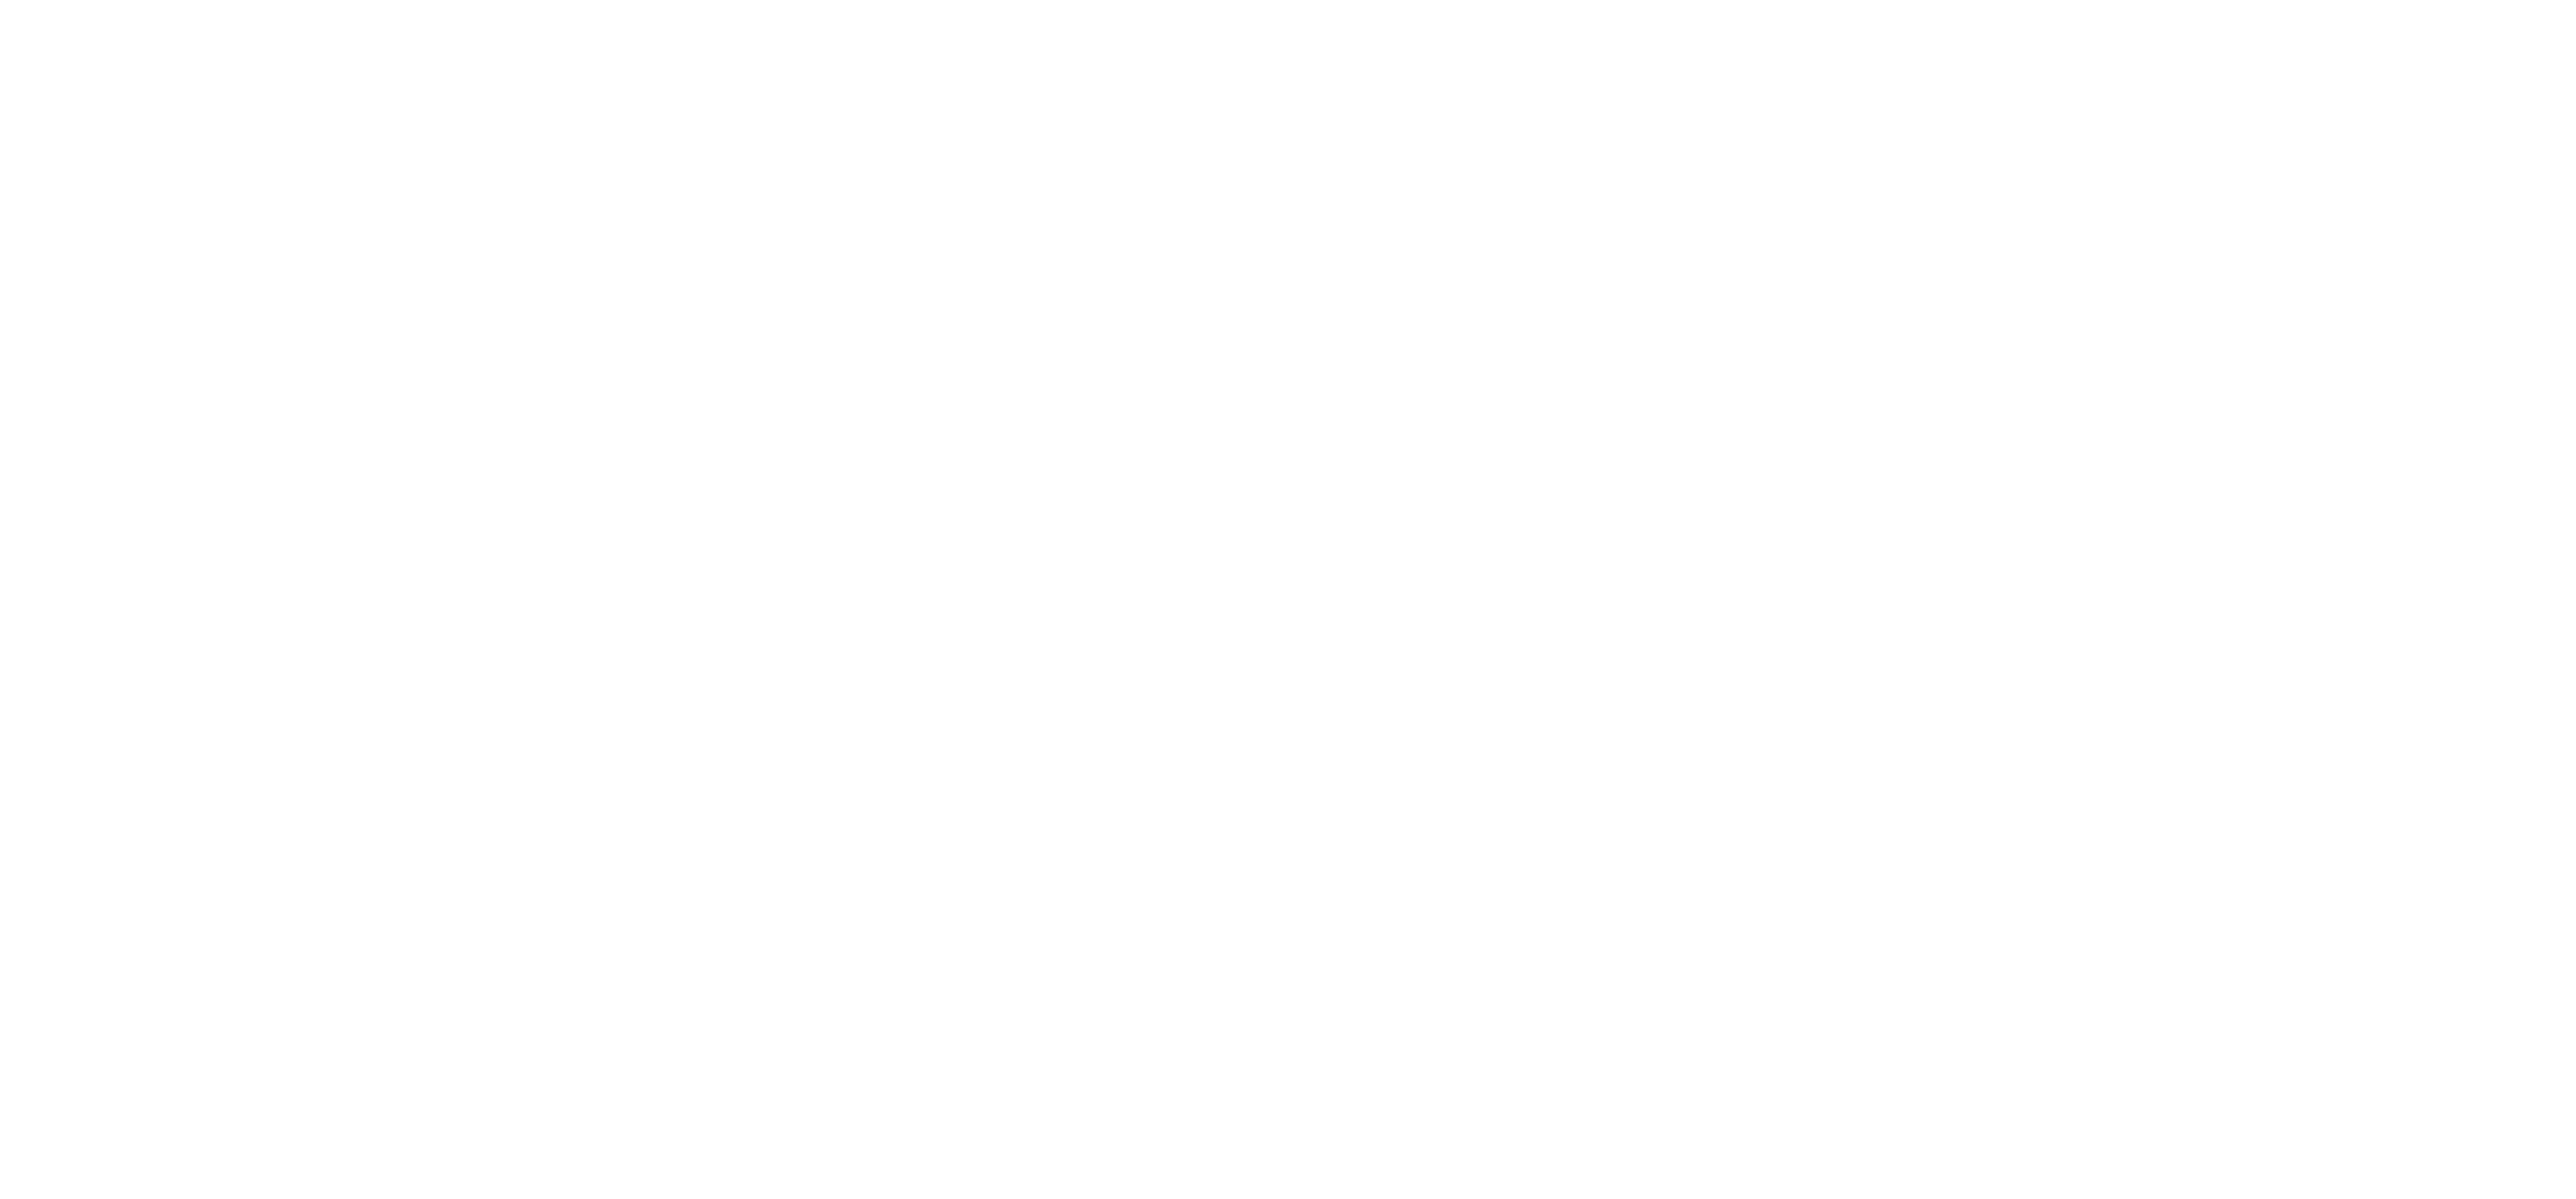 The Kingsley